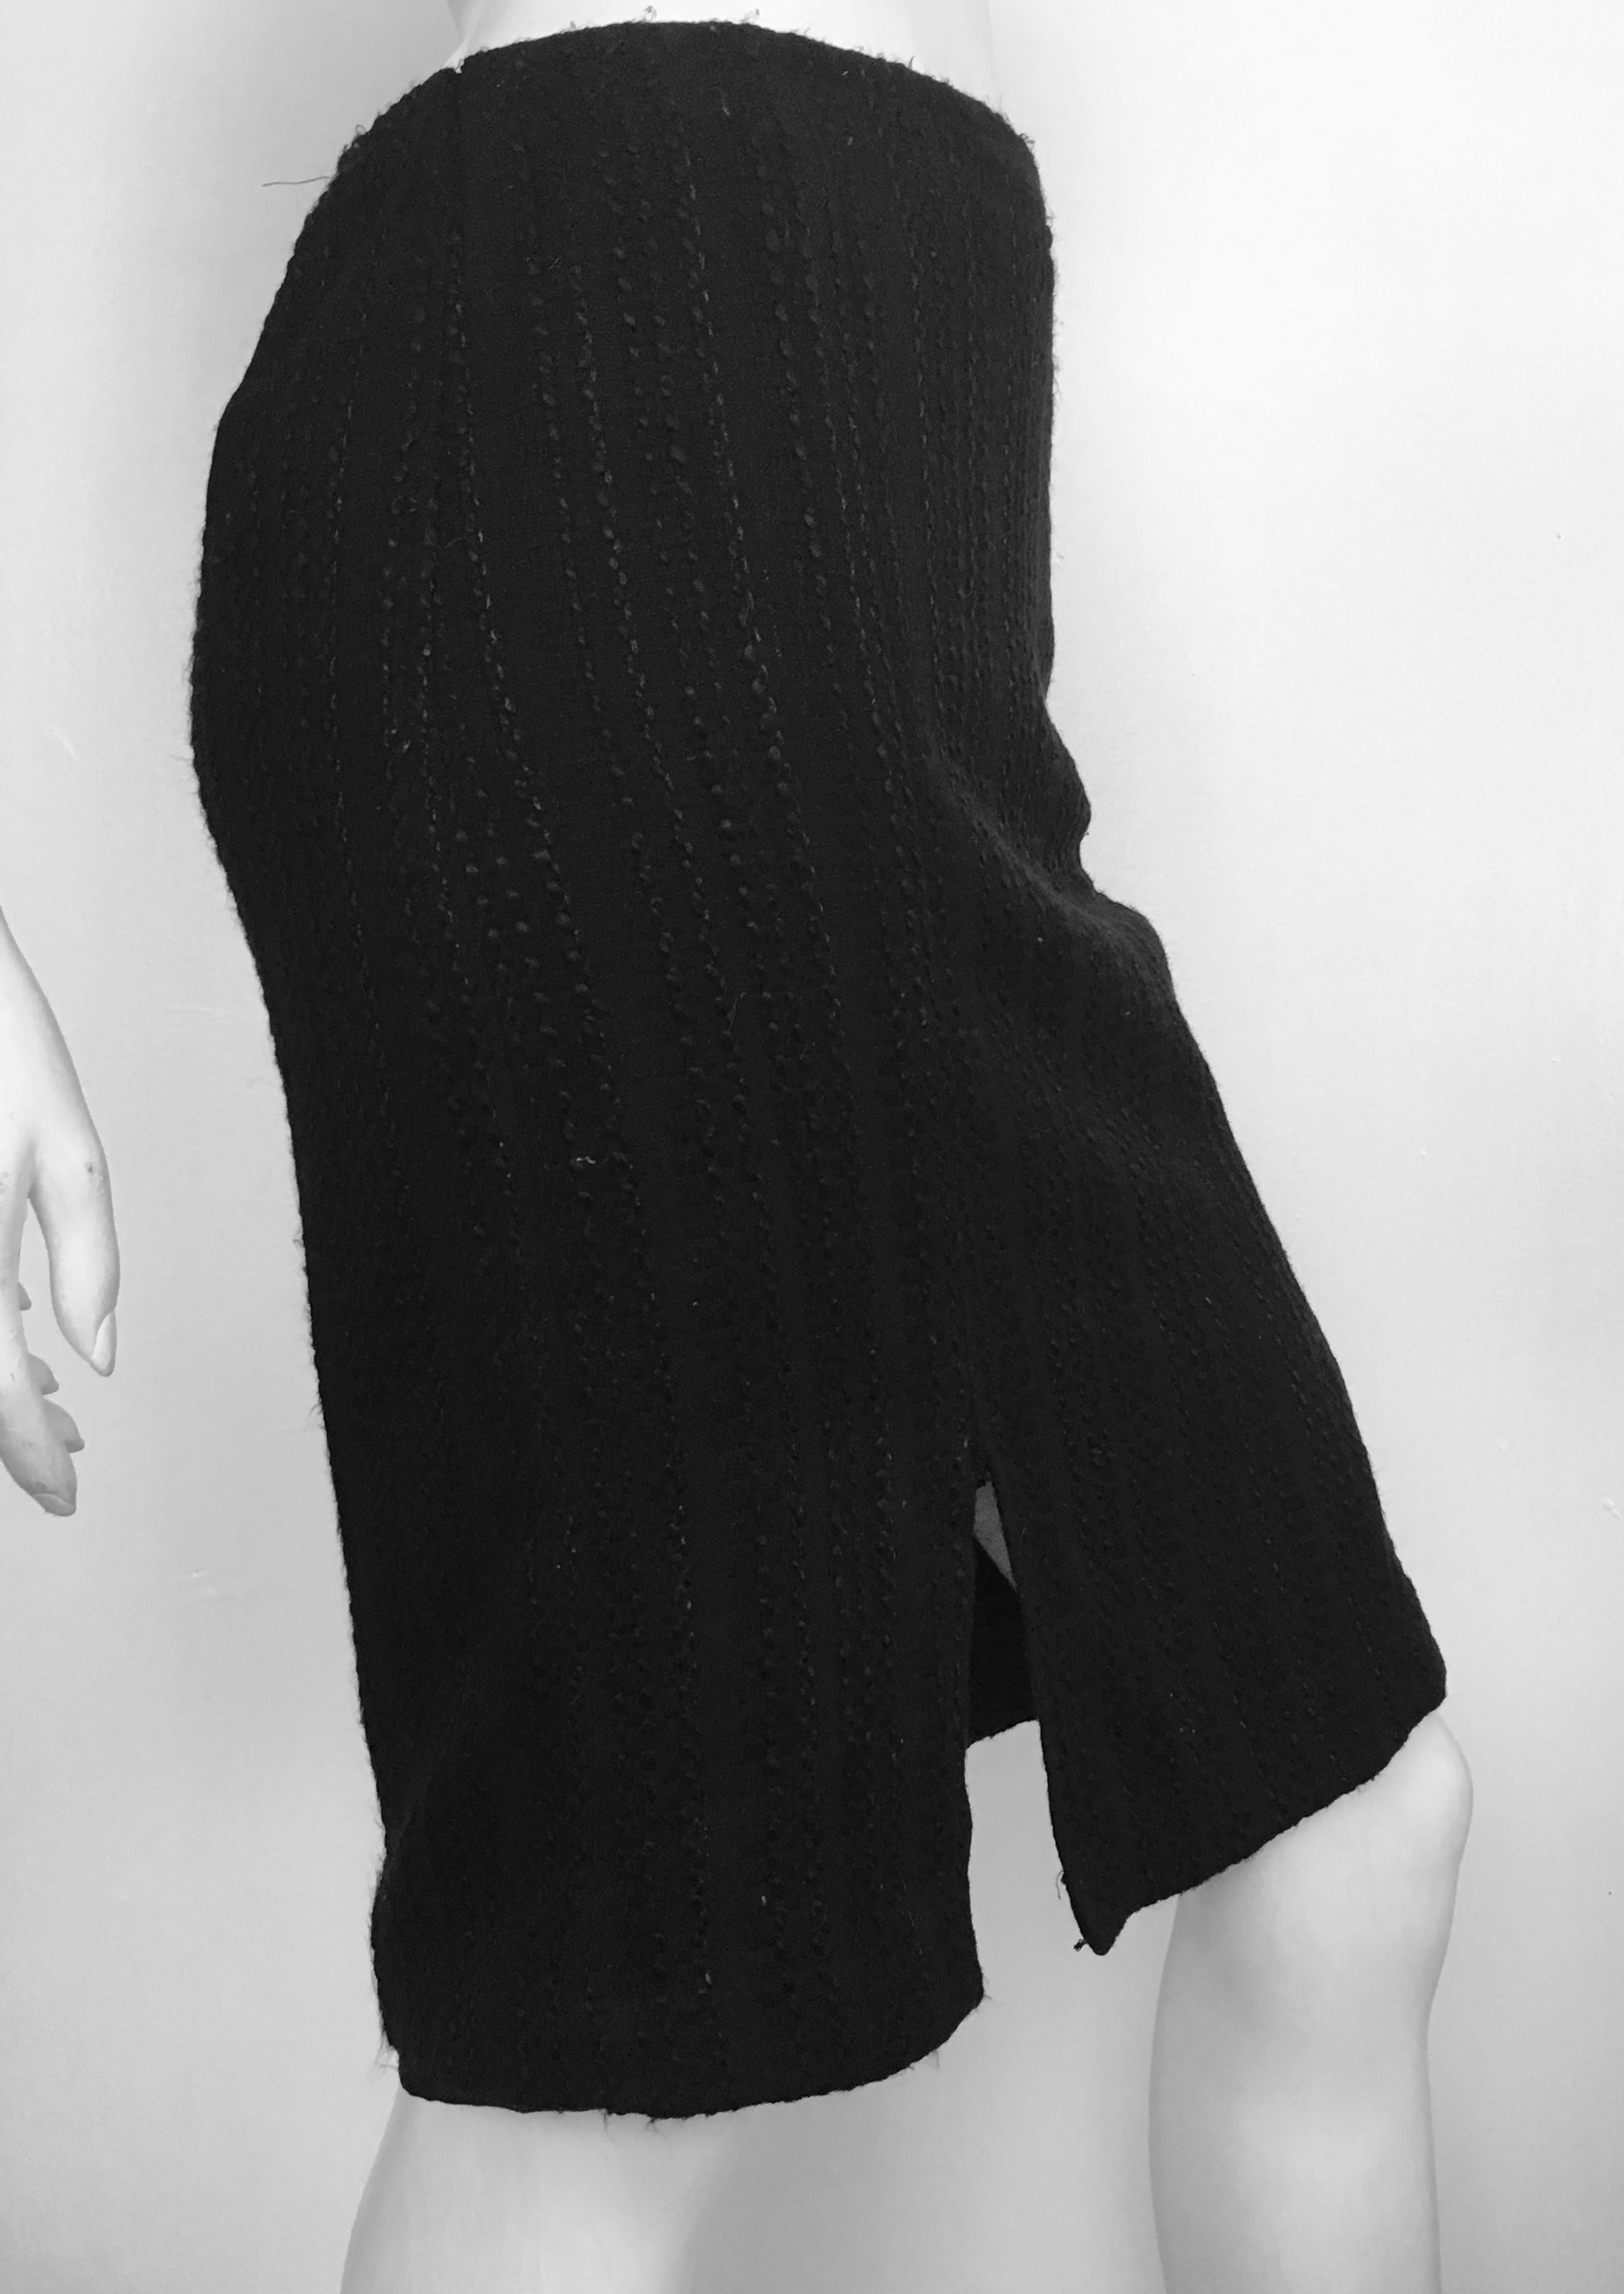 Pierre Cardin 1990s Black Skirt Size 6. For Sale 7